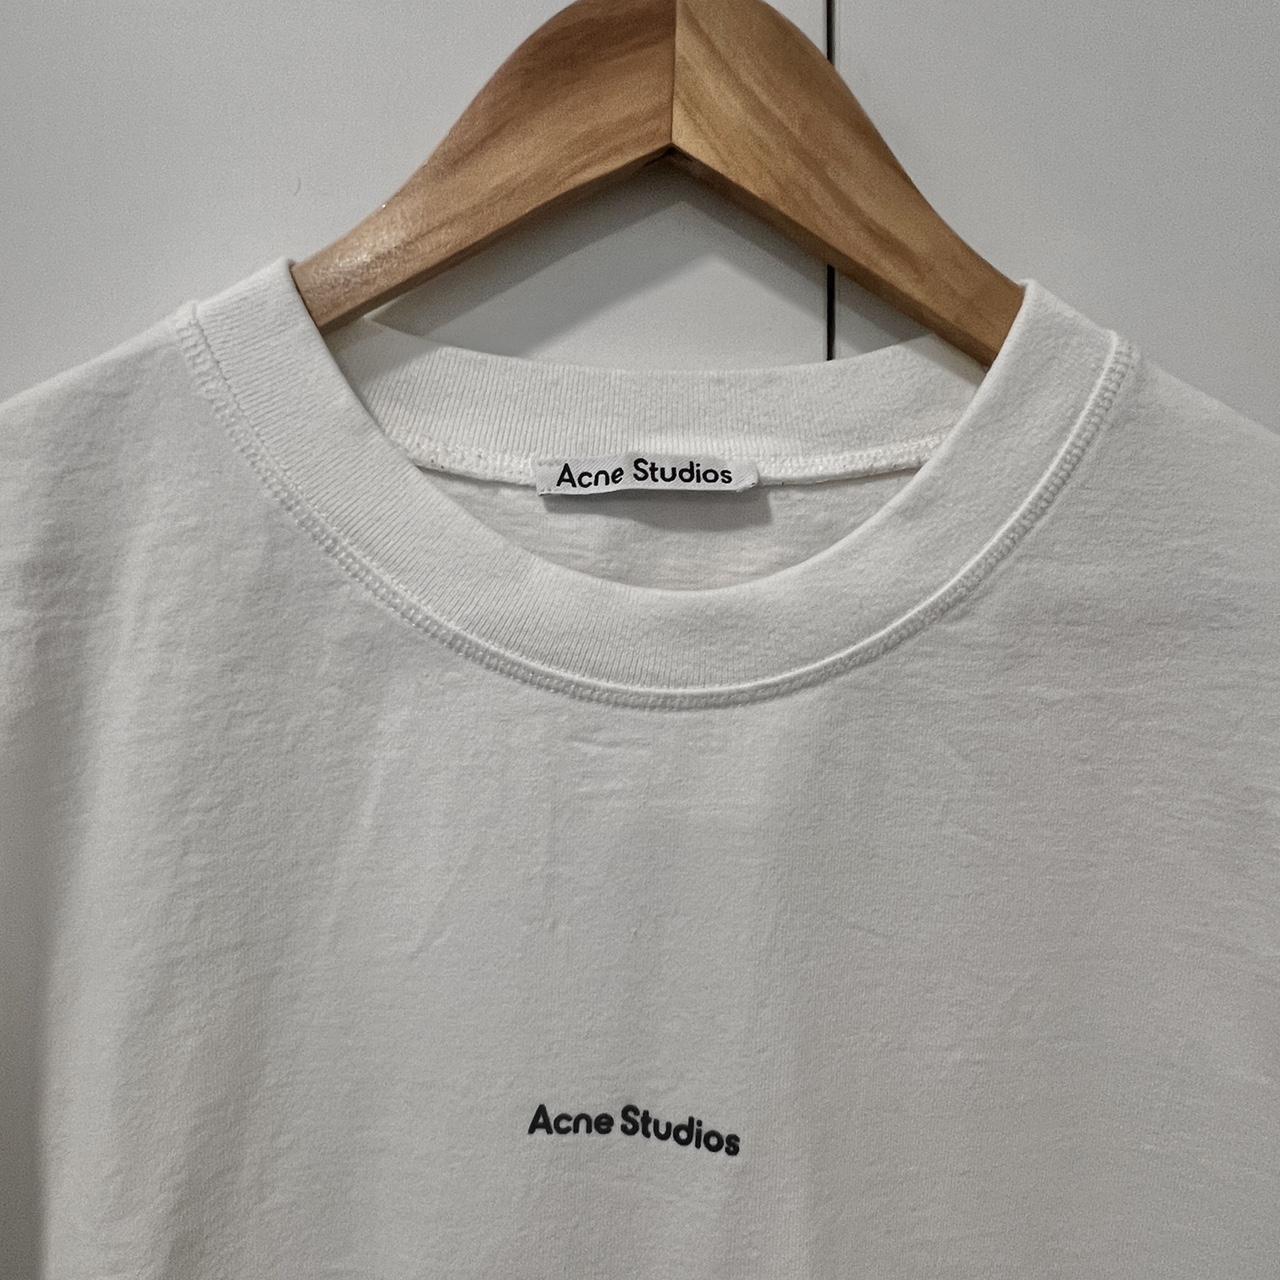 Acne Studios Edie Stamp Logo T-Shirt White Size... - Depop